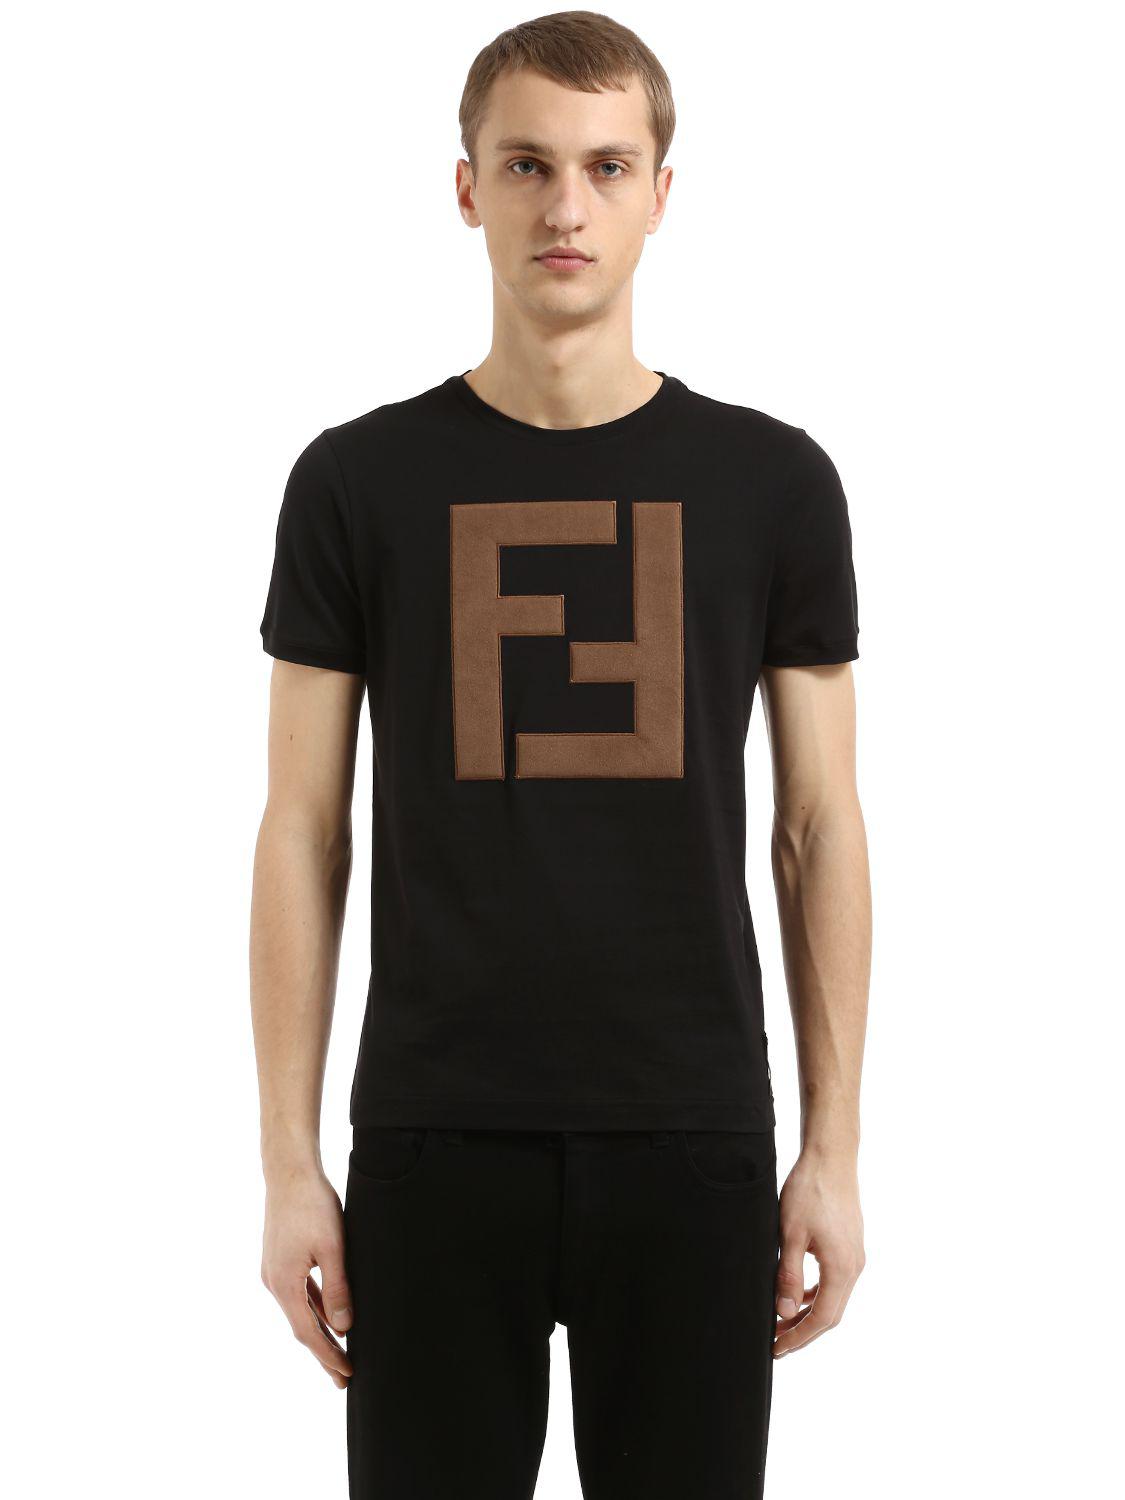 Fendi Maxi Ff Logo Cotton Jersey T-shirt in Black for Men - Lyst